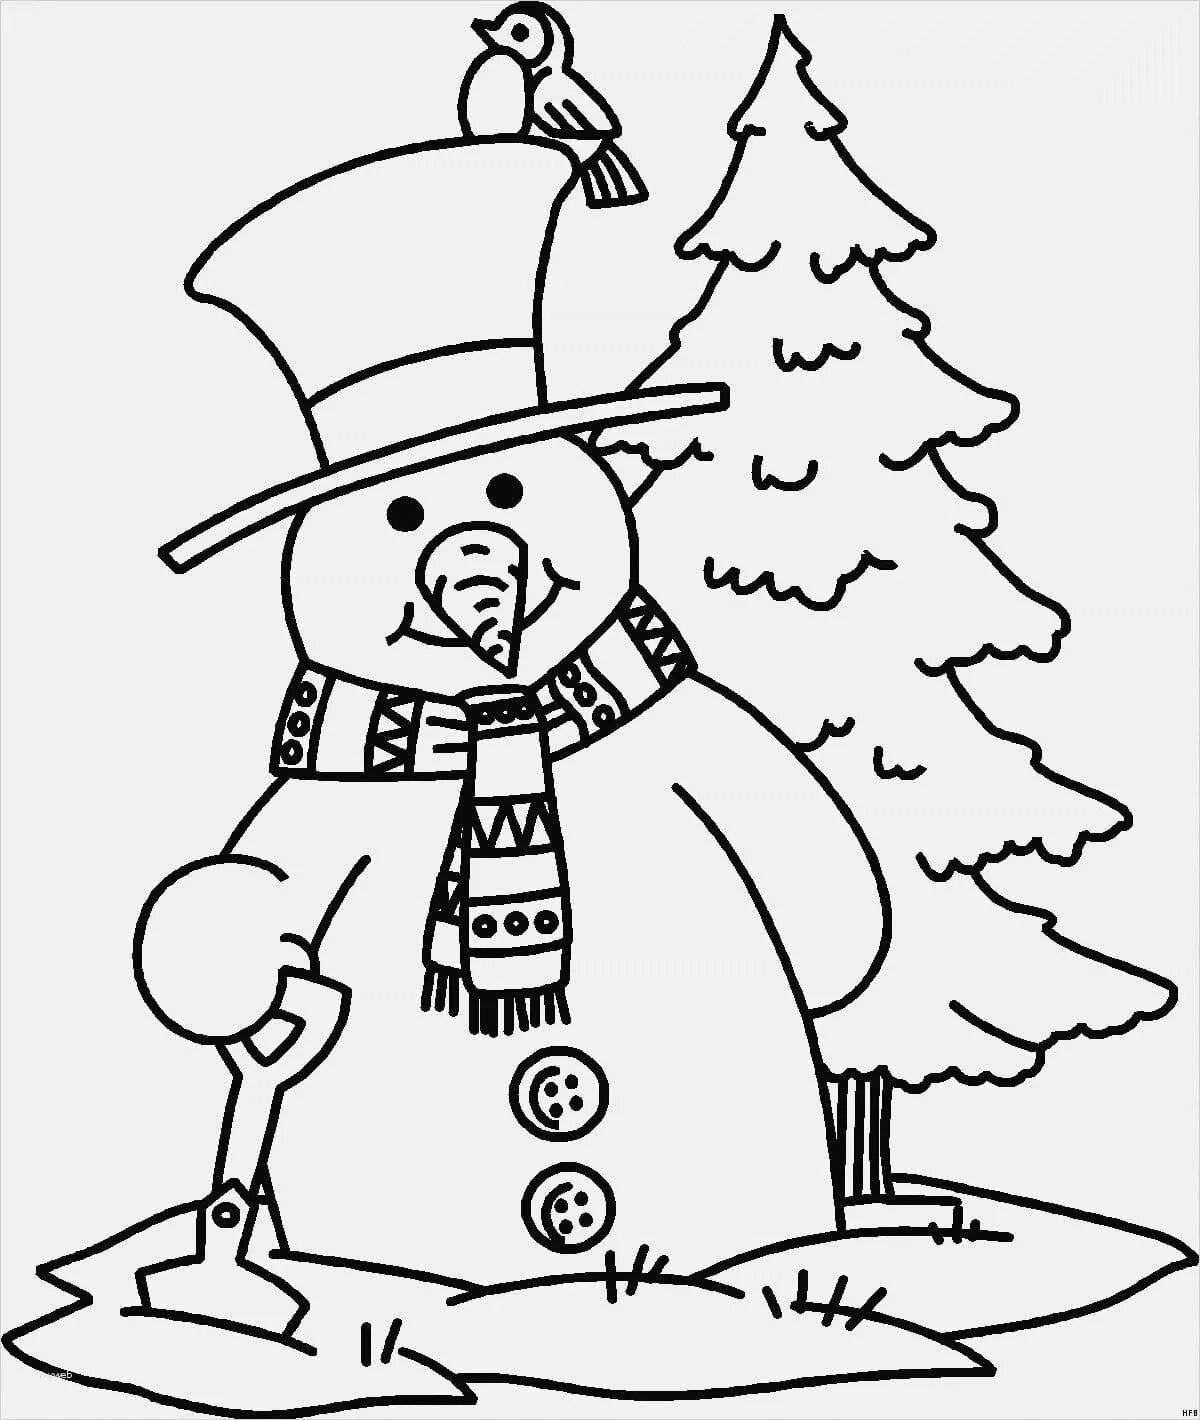 Big Christmas snowman coloring book